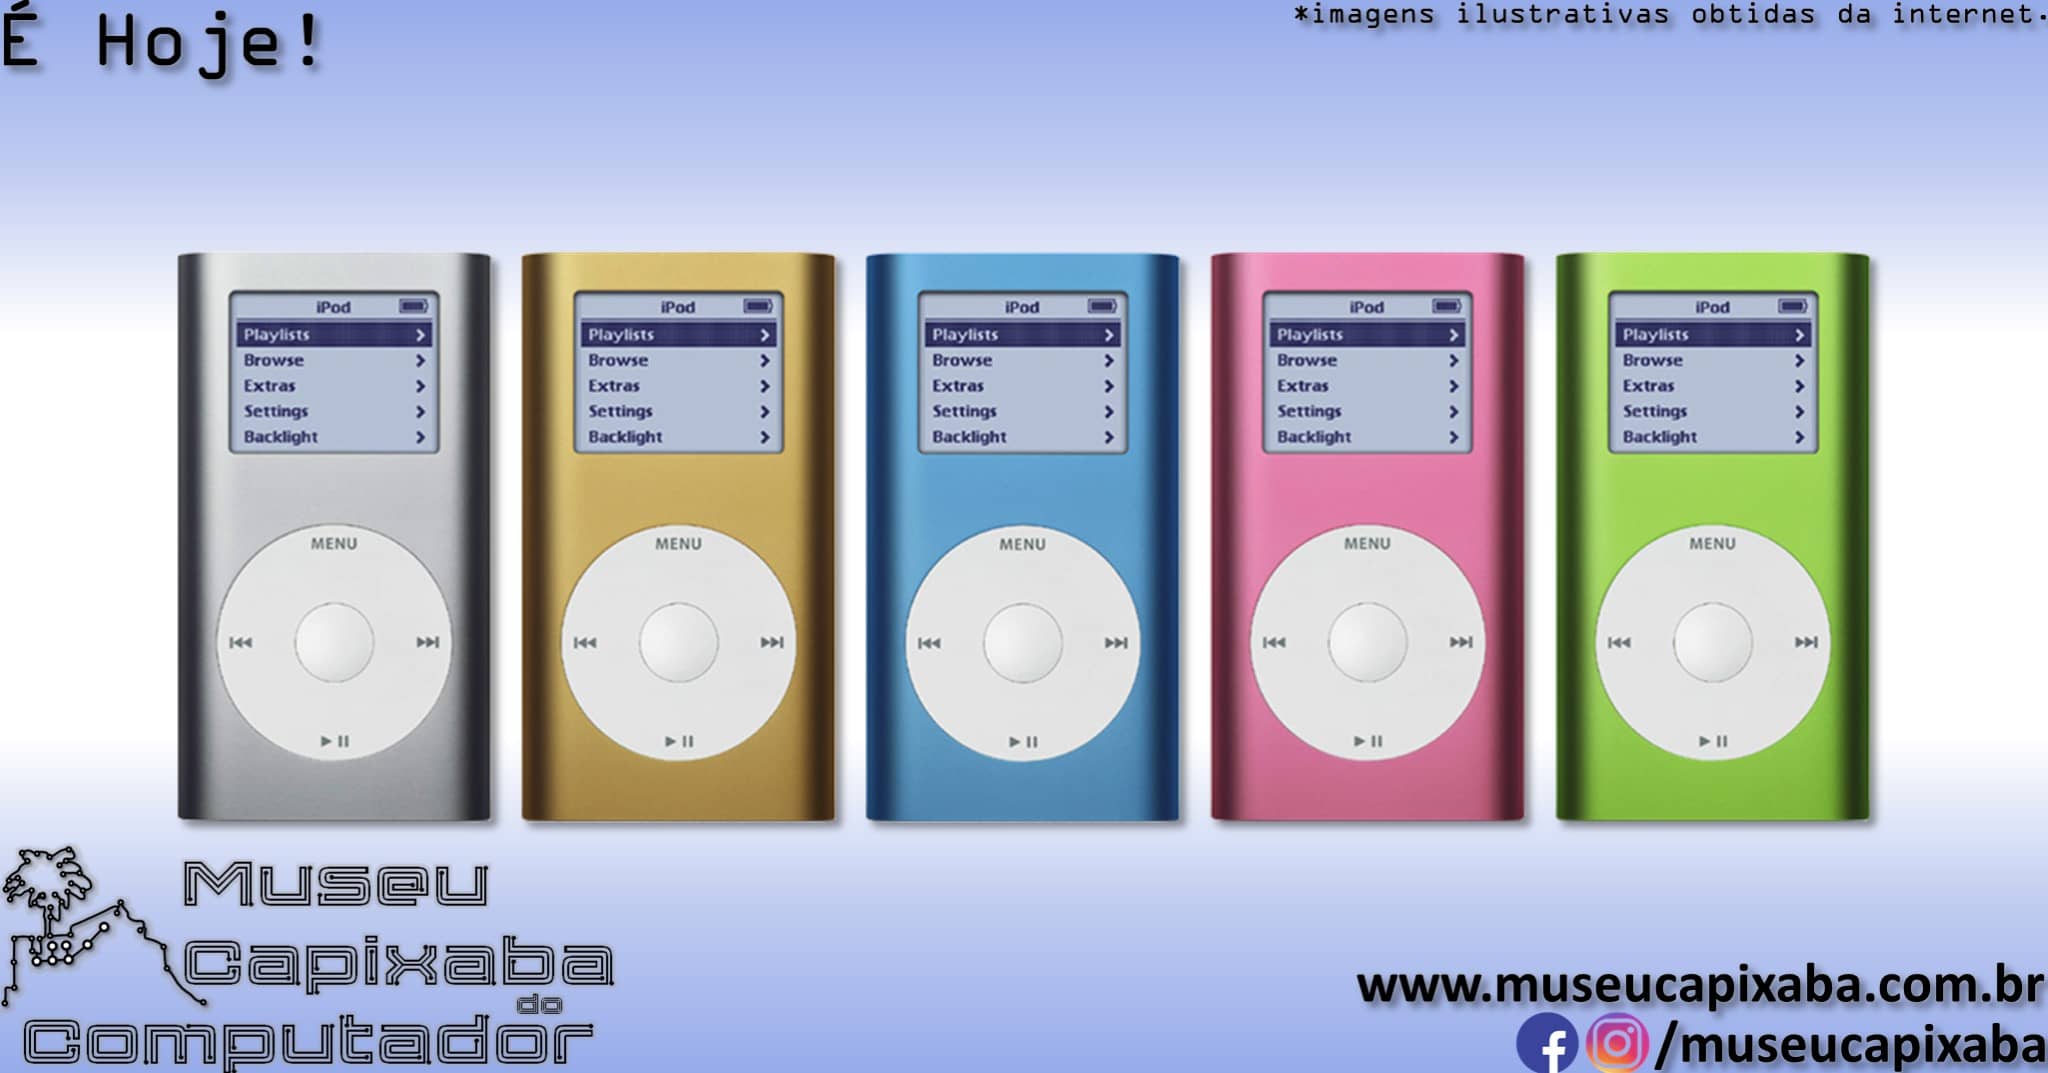 Apple iPod mini 2